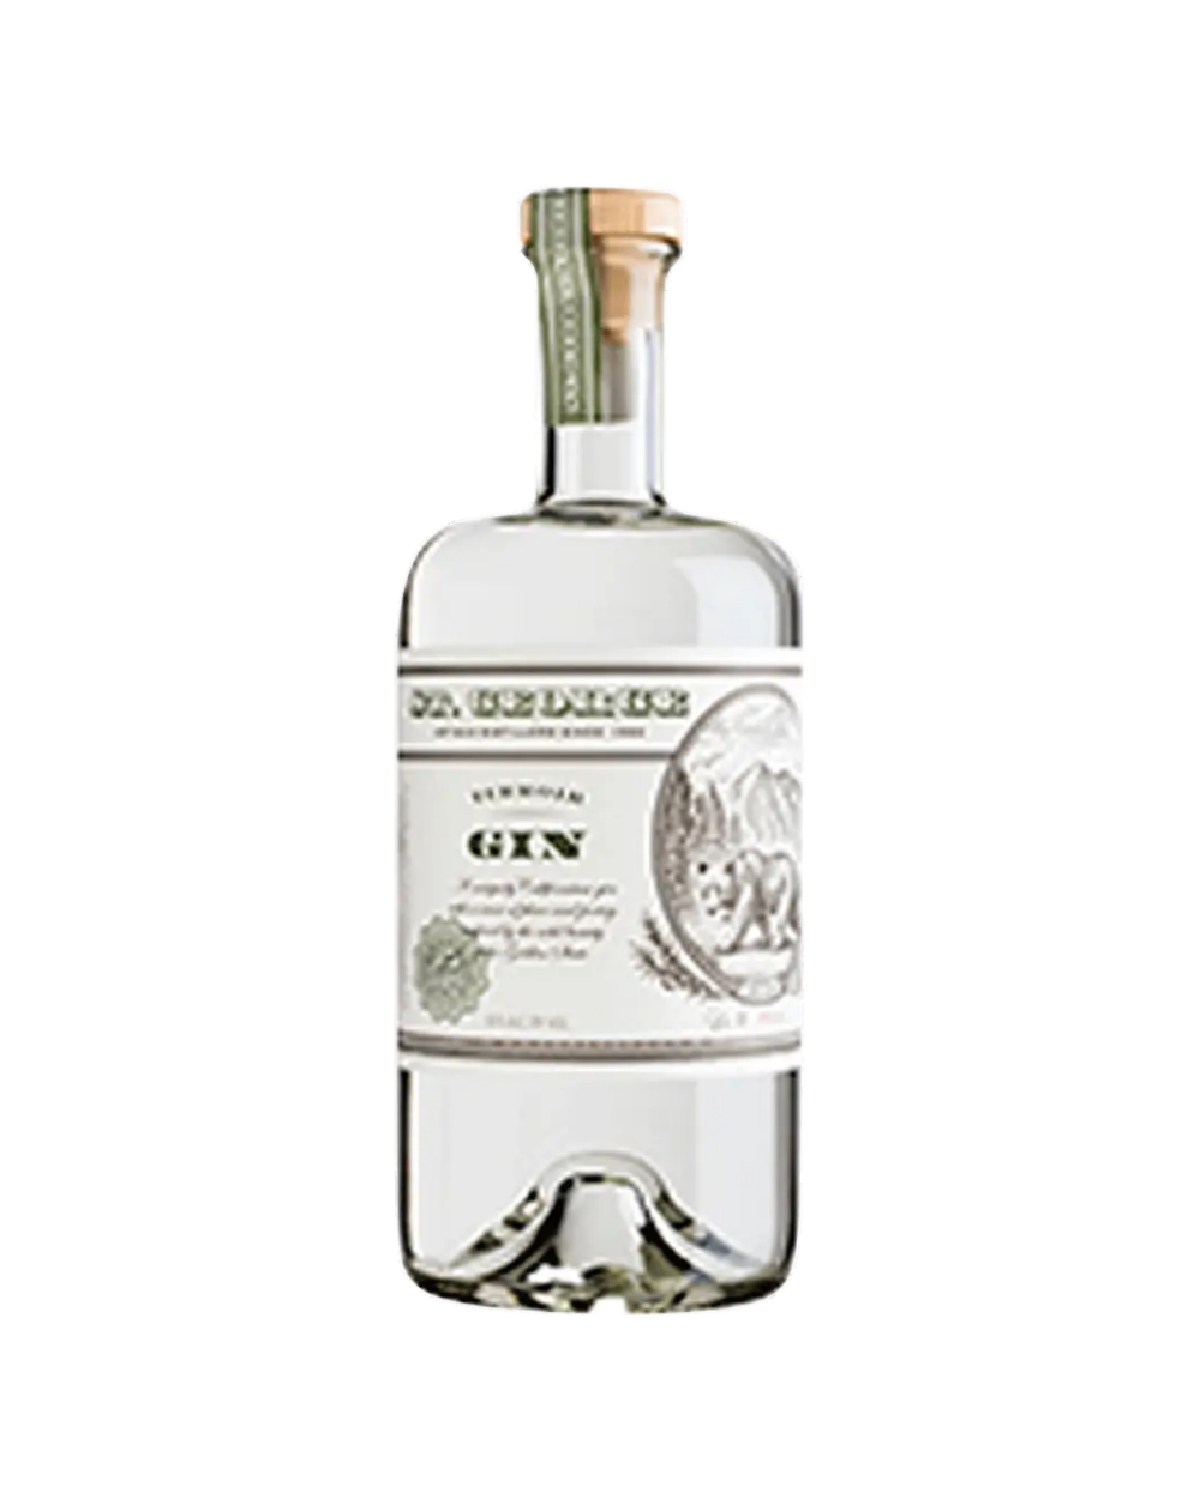 St.George Terroir gin 750ml